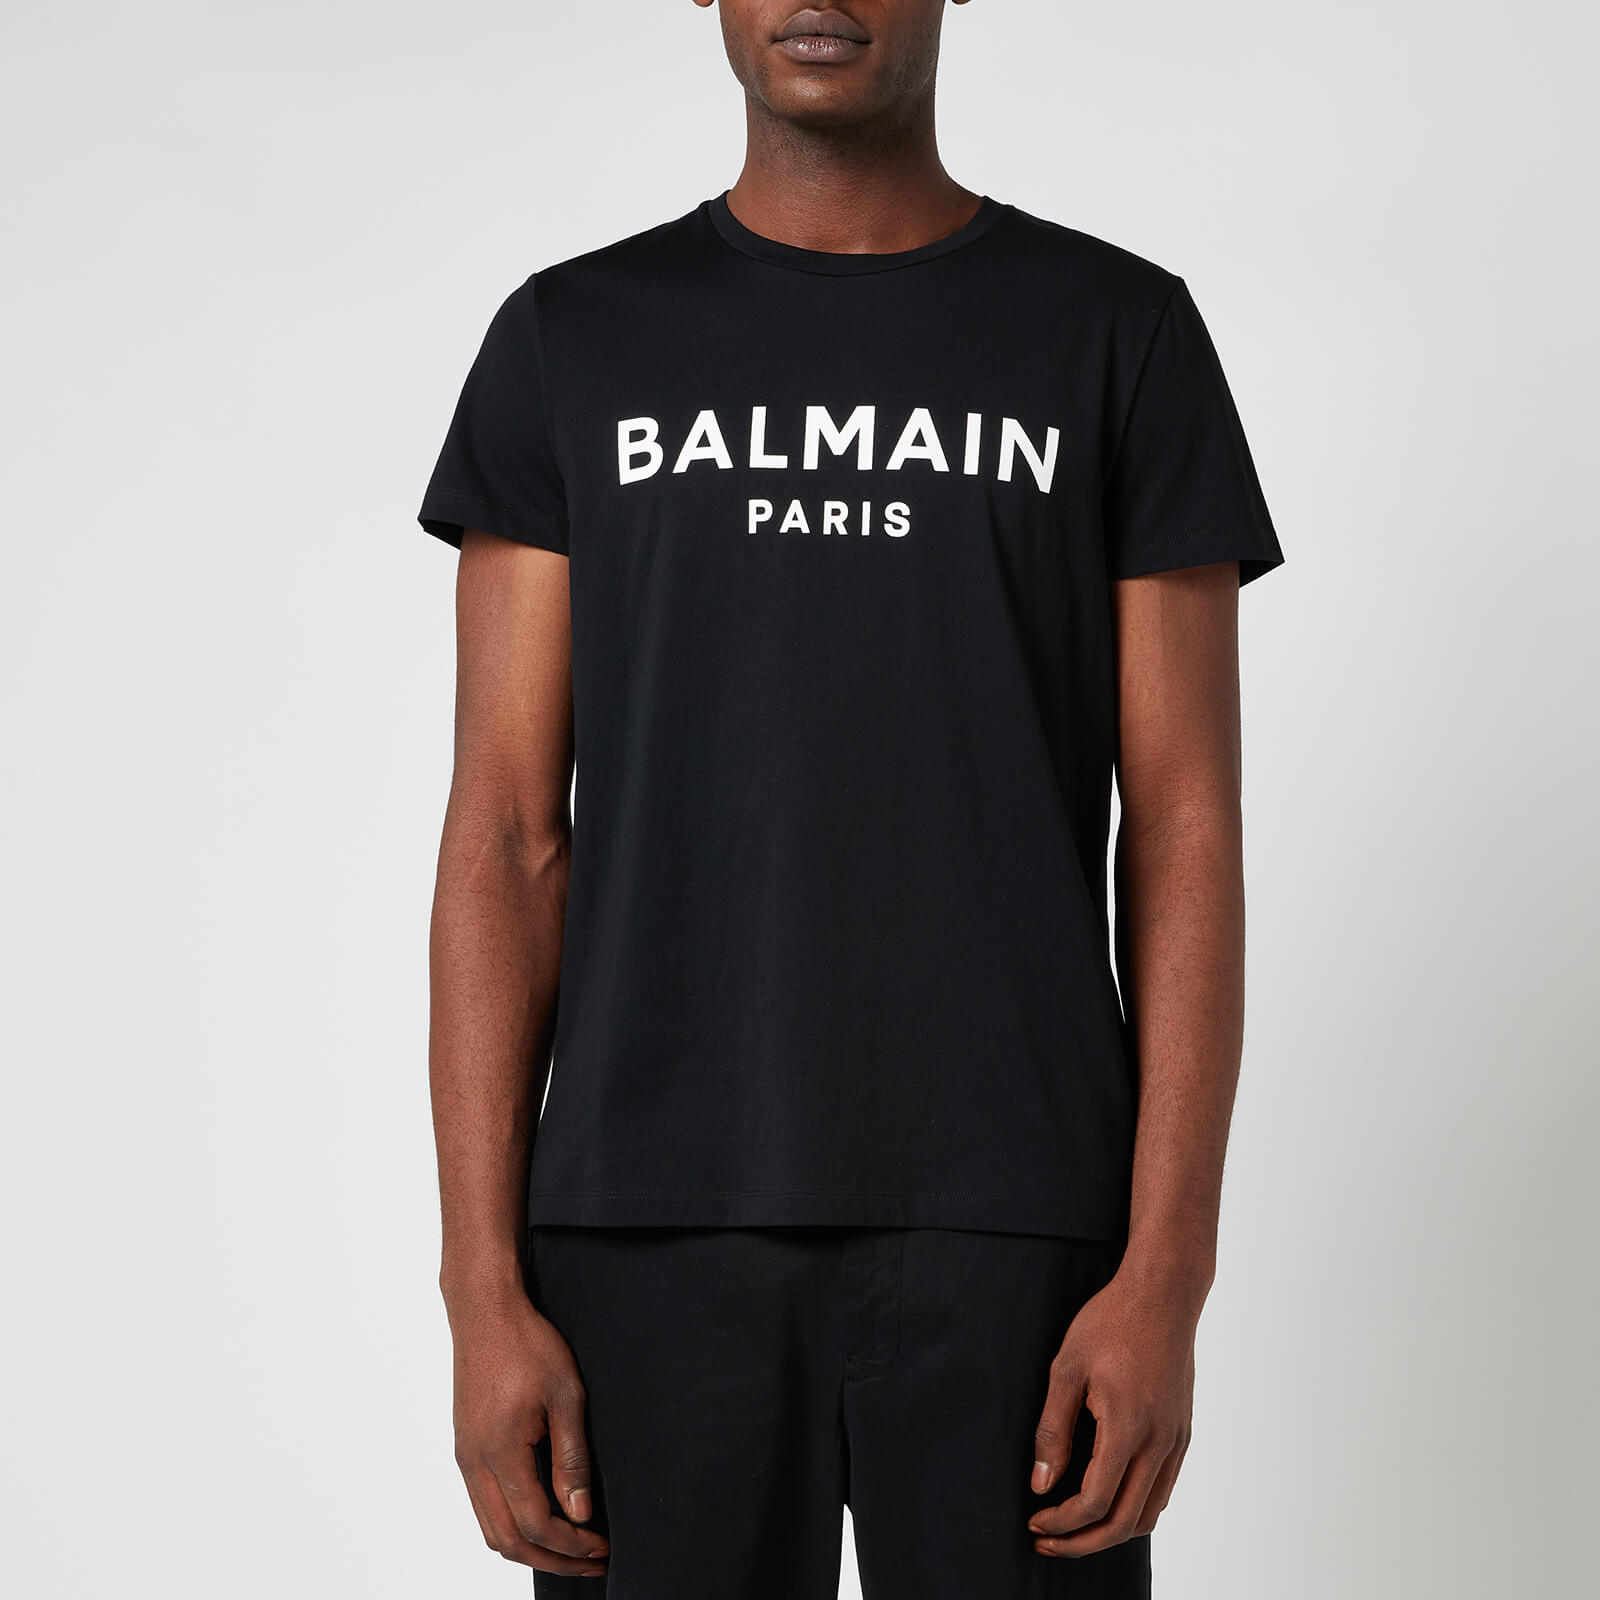 Balmain Men's Printed Logo T-Shirt - Black/White - S